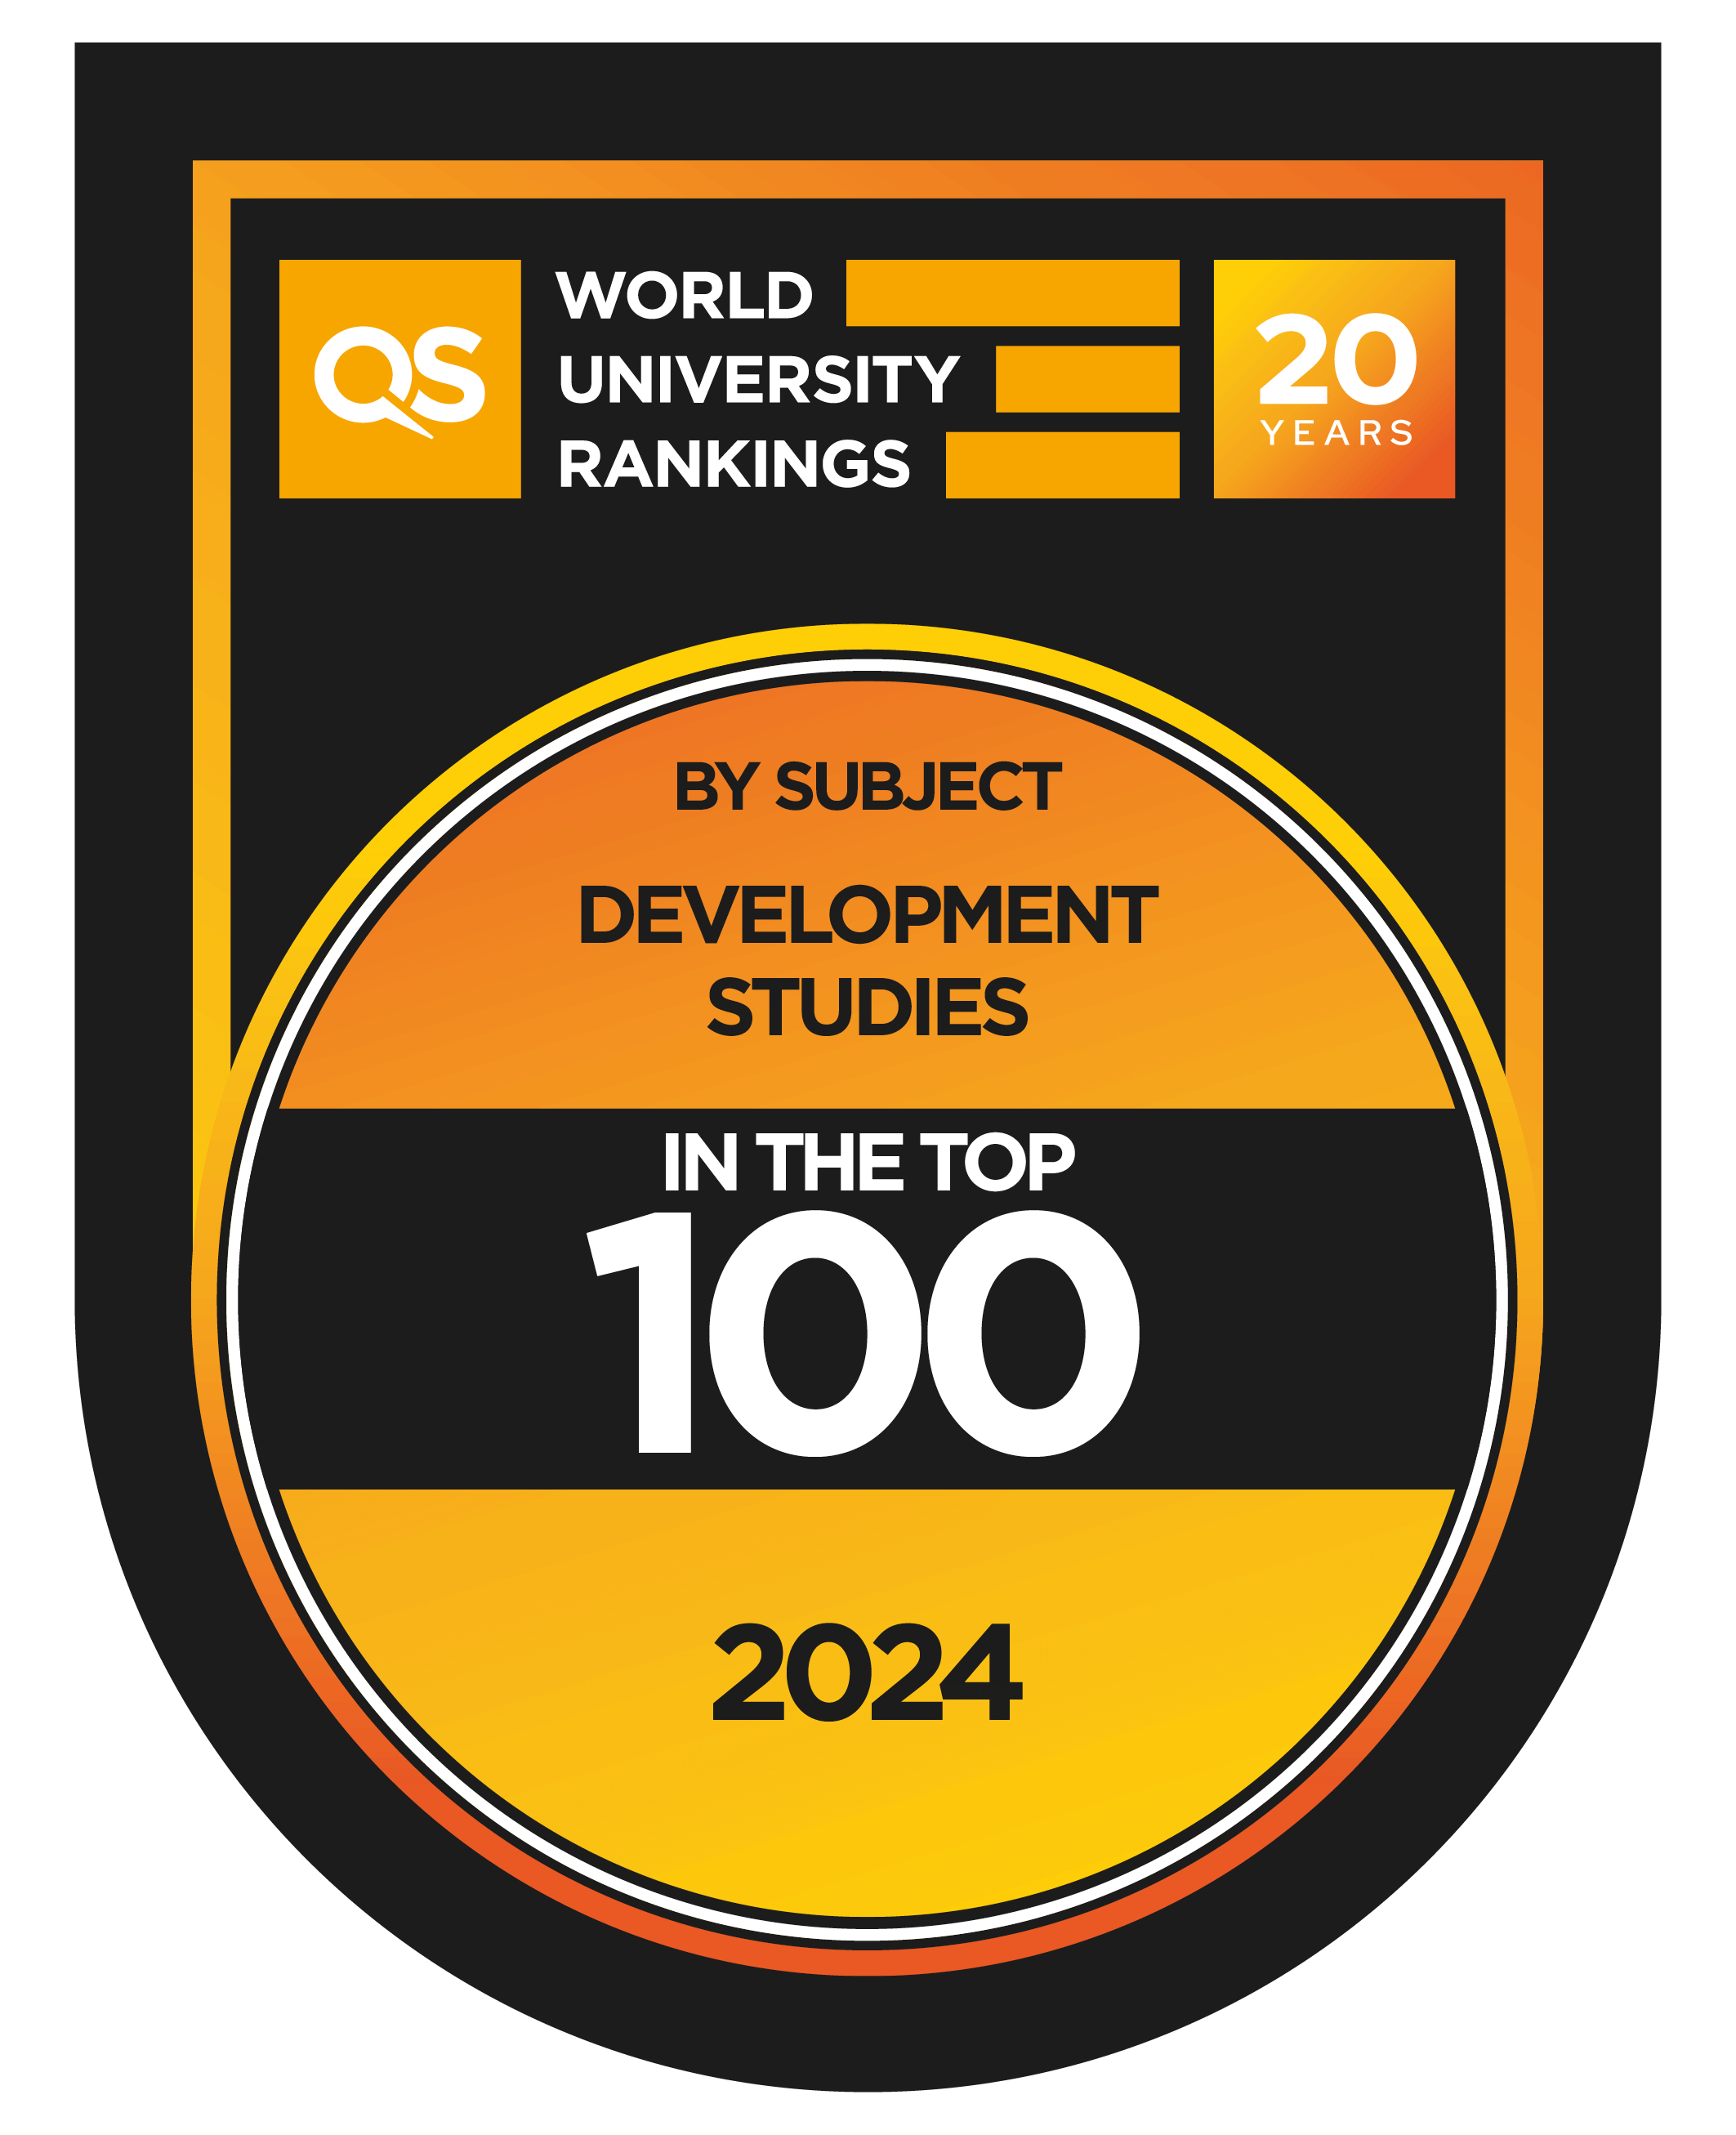 Top 100 in Development Studies in the QS World University Rankings 2024